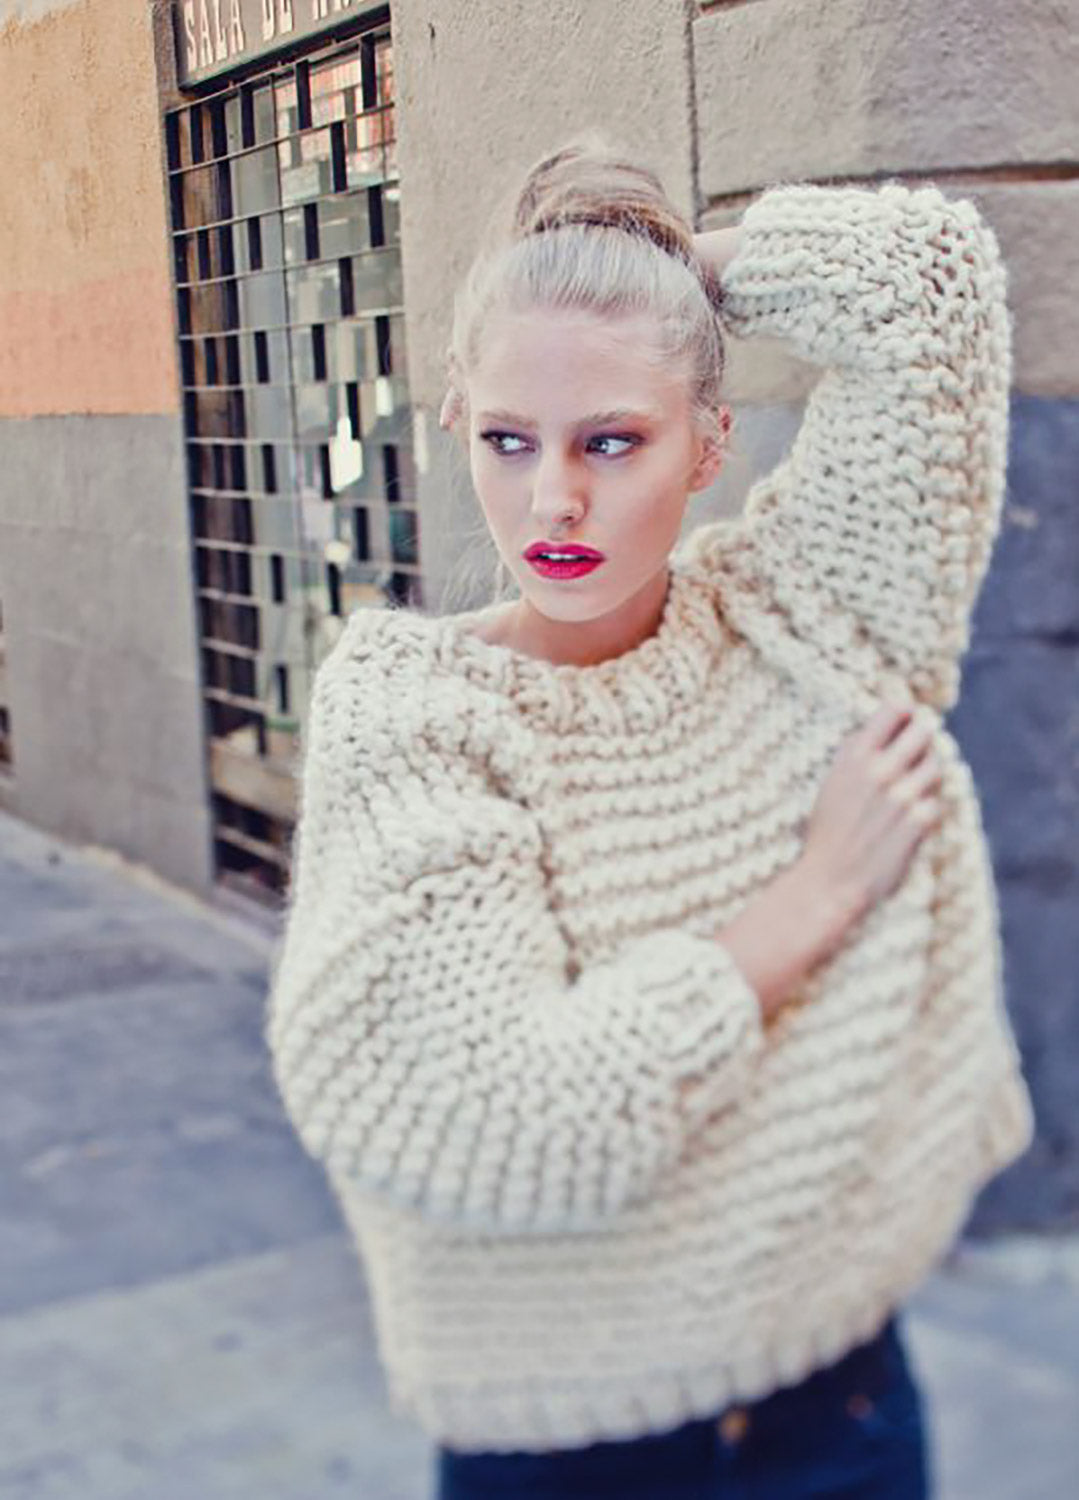 Nolita Sweater Kit